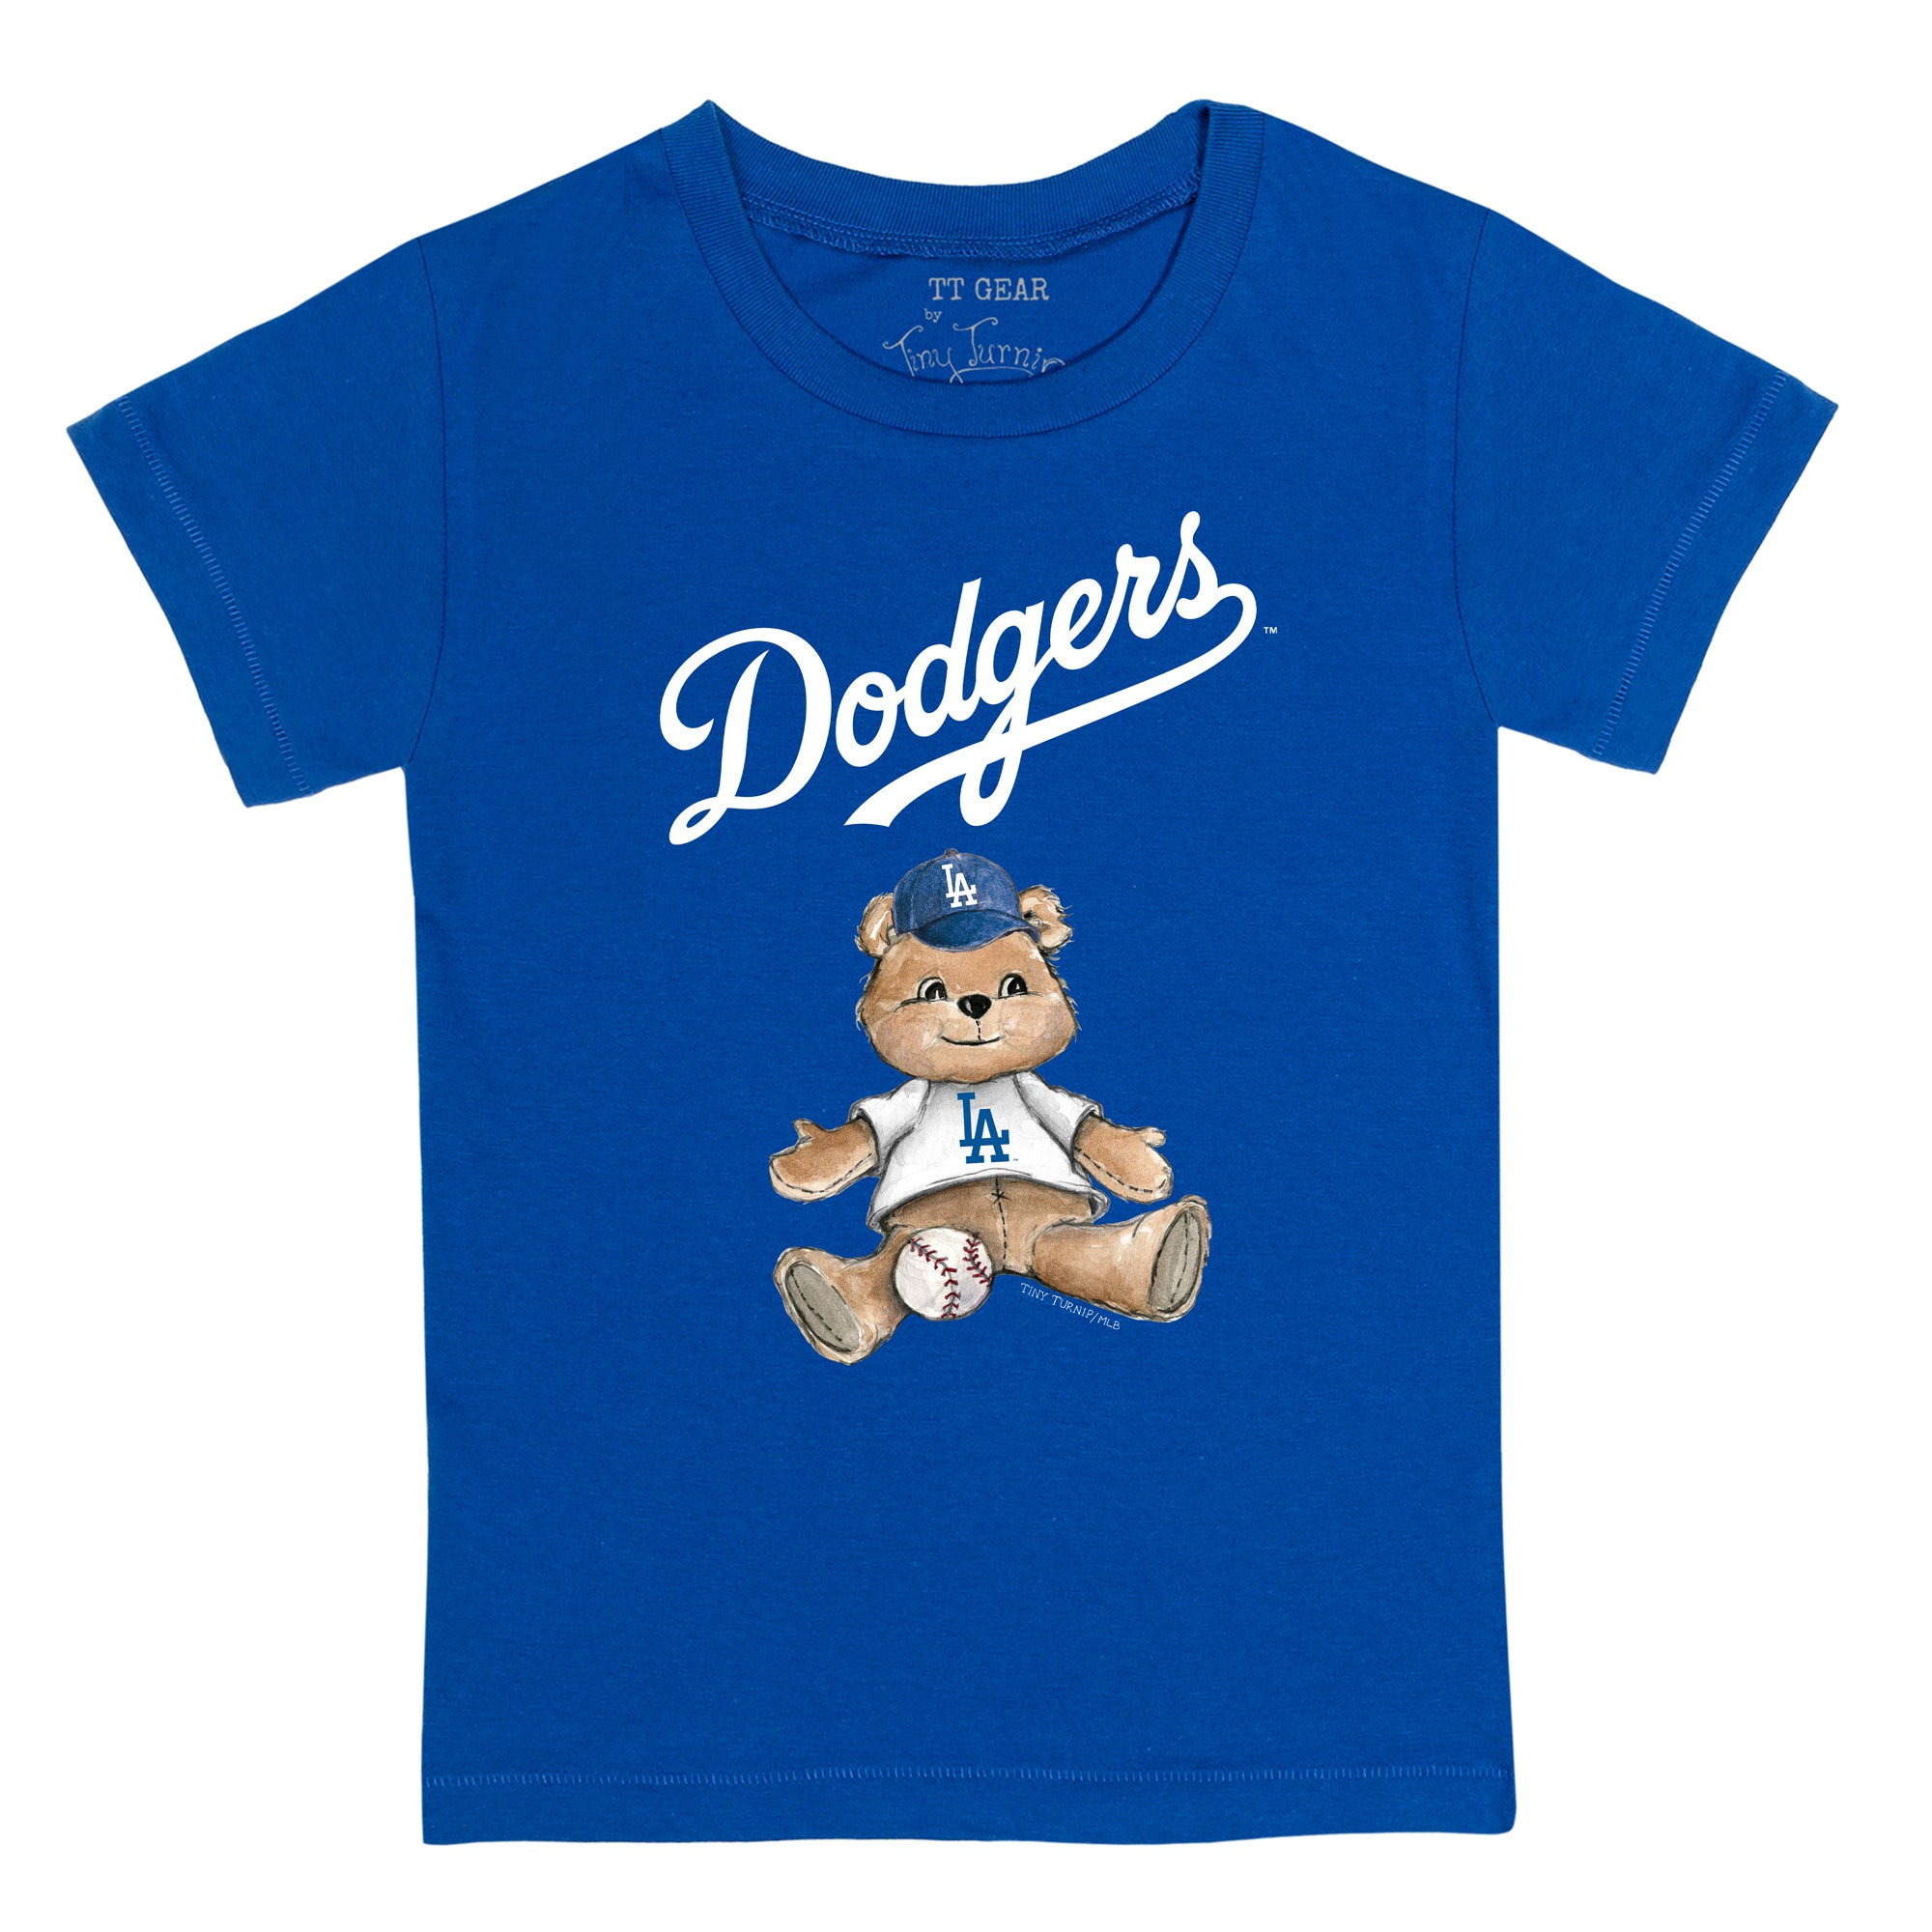 Chicago White Sox Baseball T-Shirt for Stuffed Animals